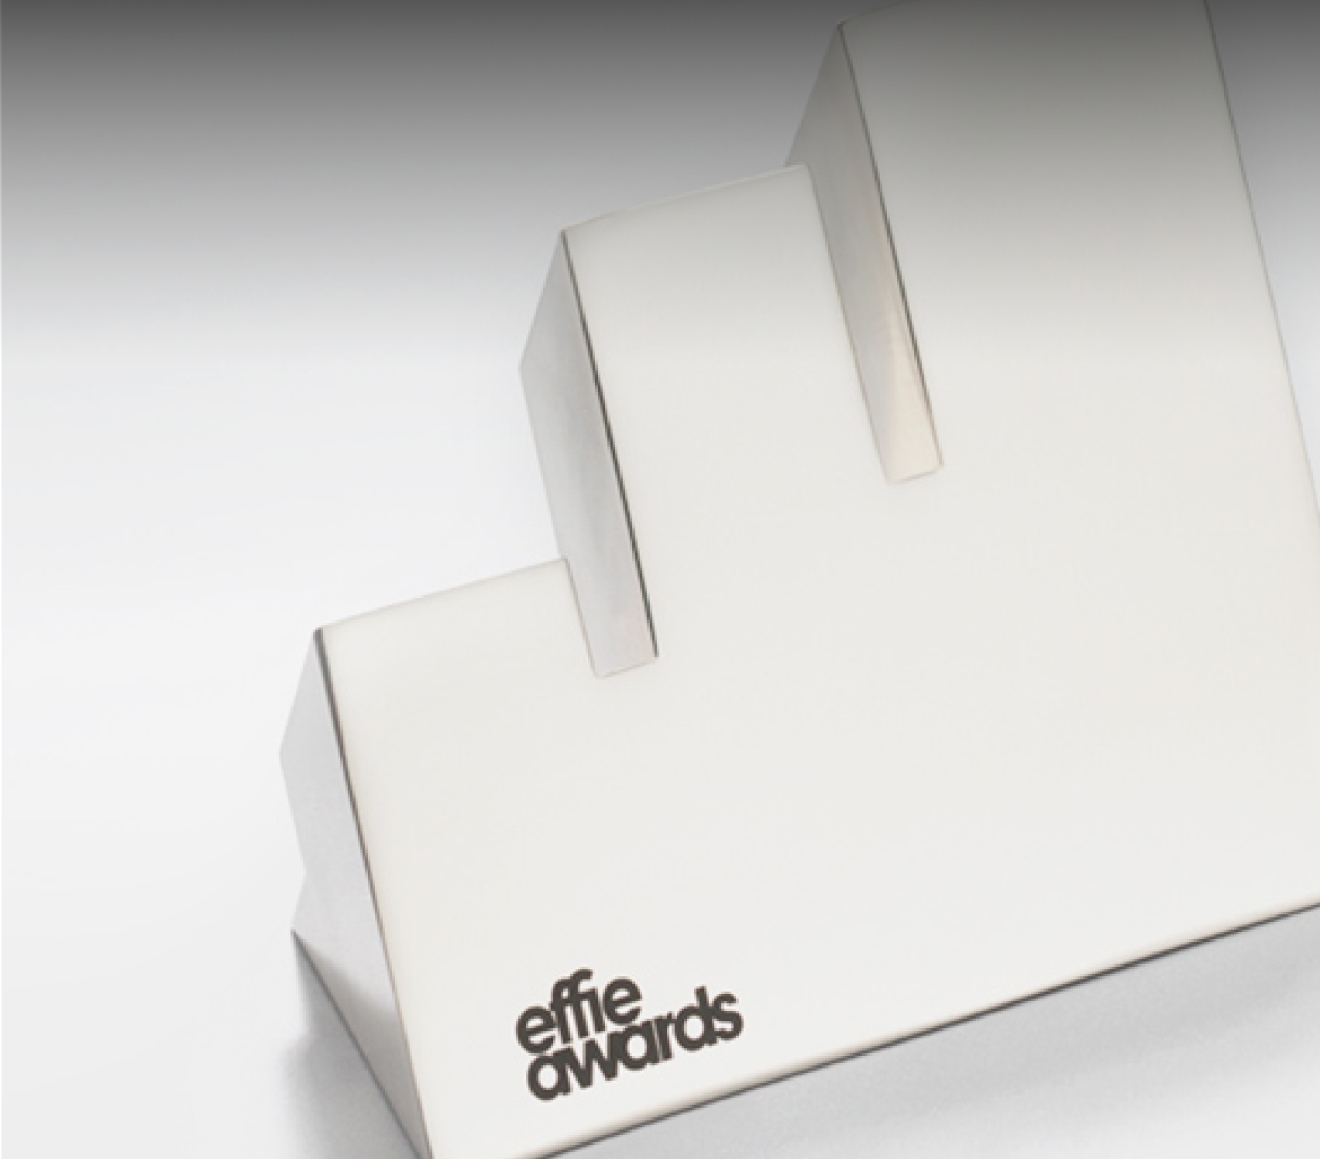 award winning branding and design agency | Effie Awards trophy